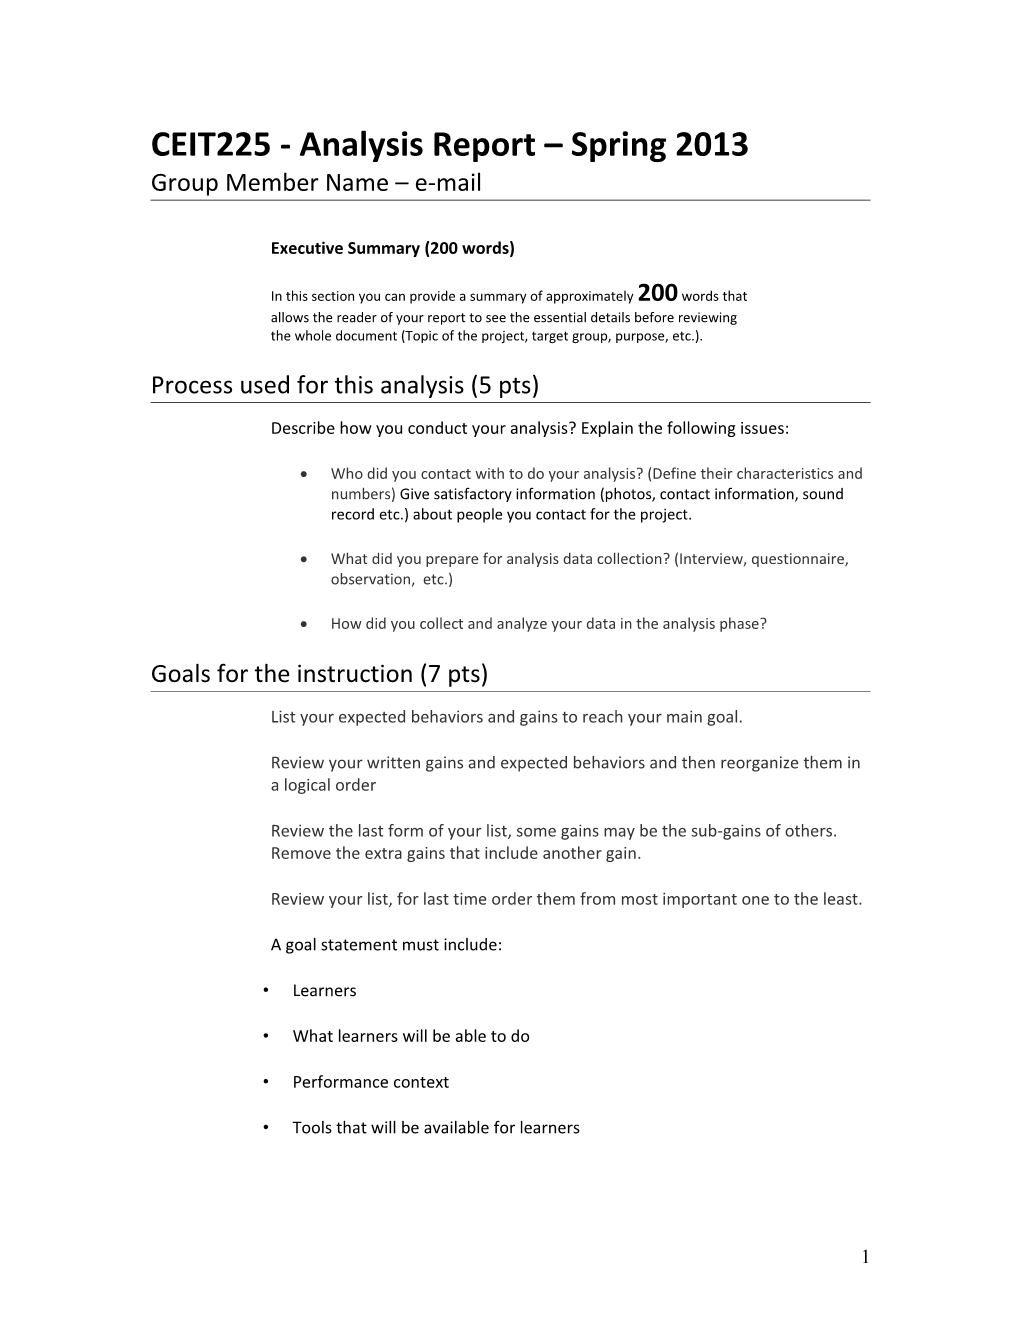 CEIT225 - Analysis Report Spring 2013